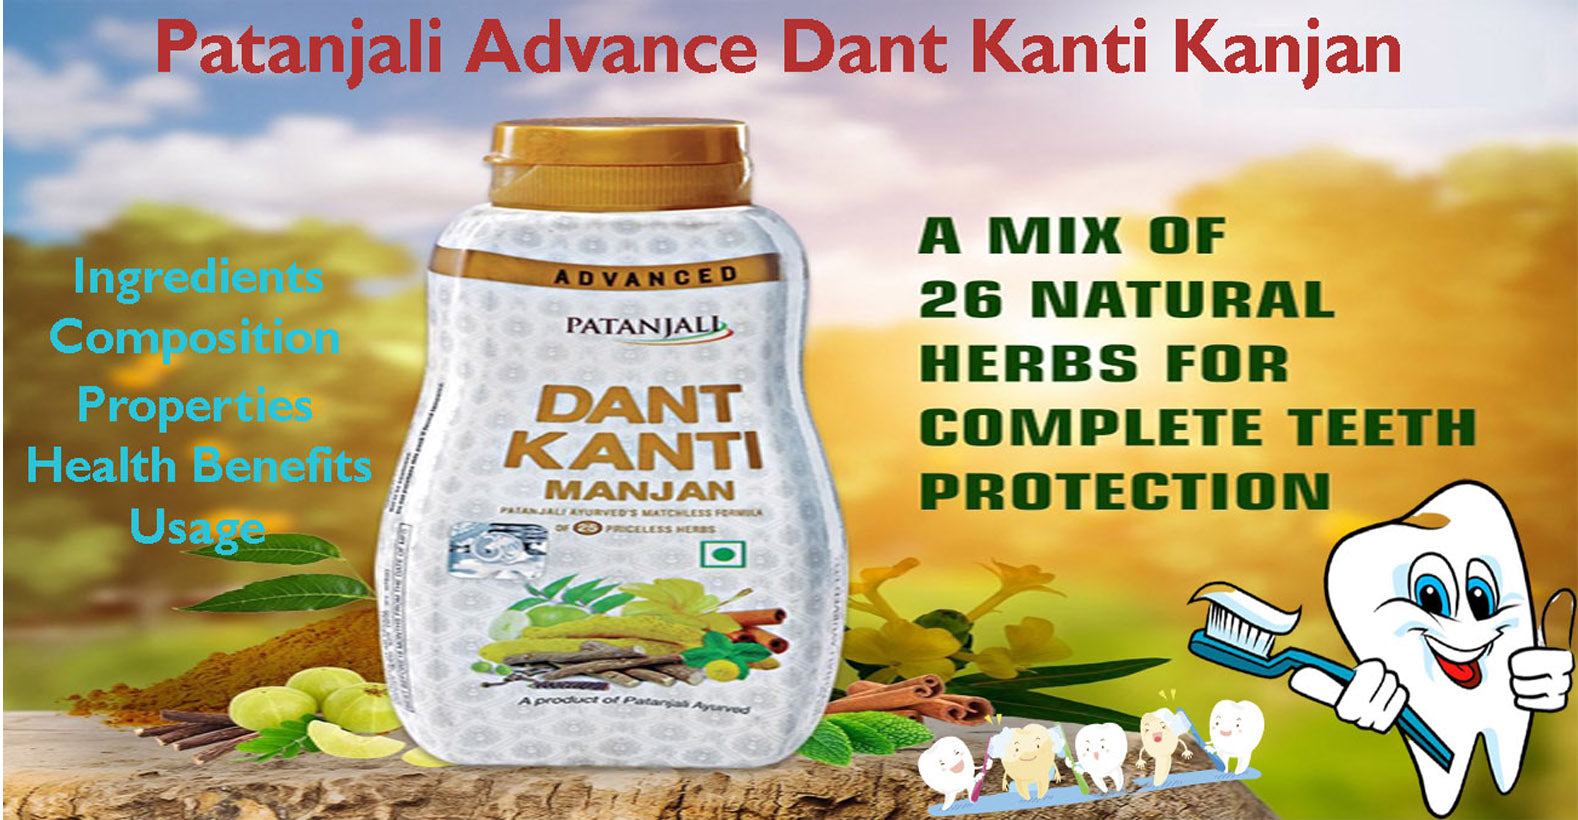 Patanjali Advanced Dant Kanti Manjan - Ingredients, Composition, Properties, Health Benefits, Usage